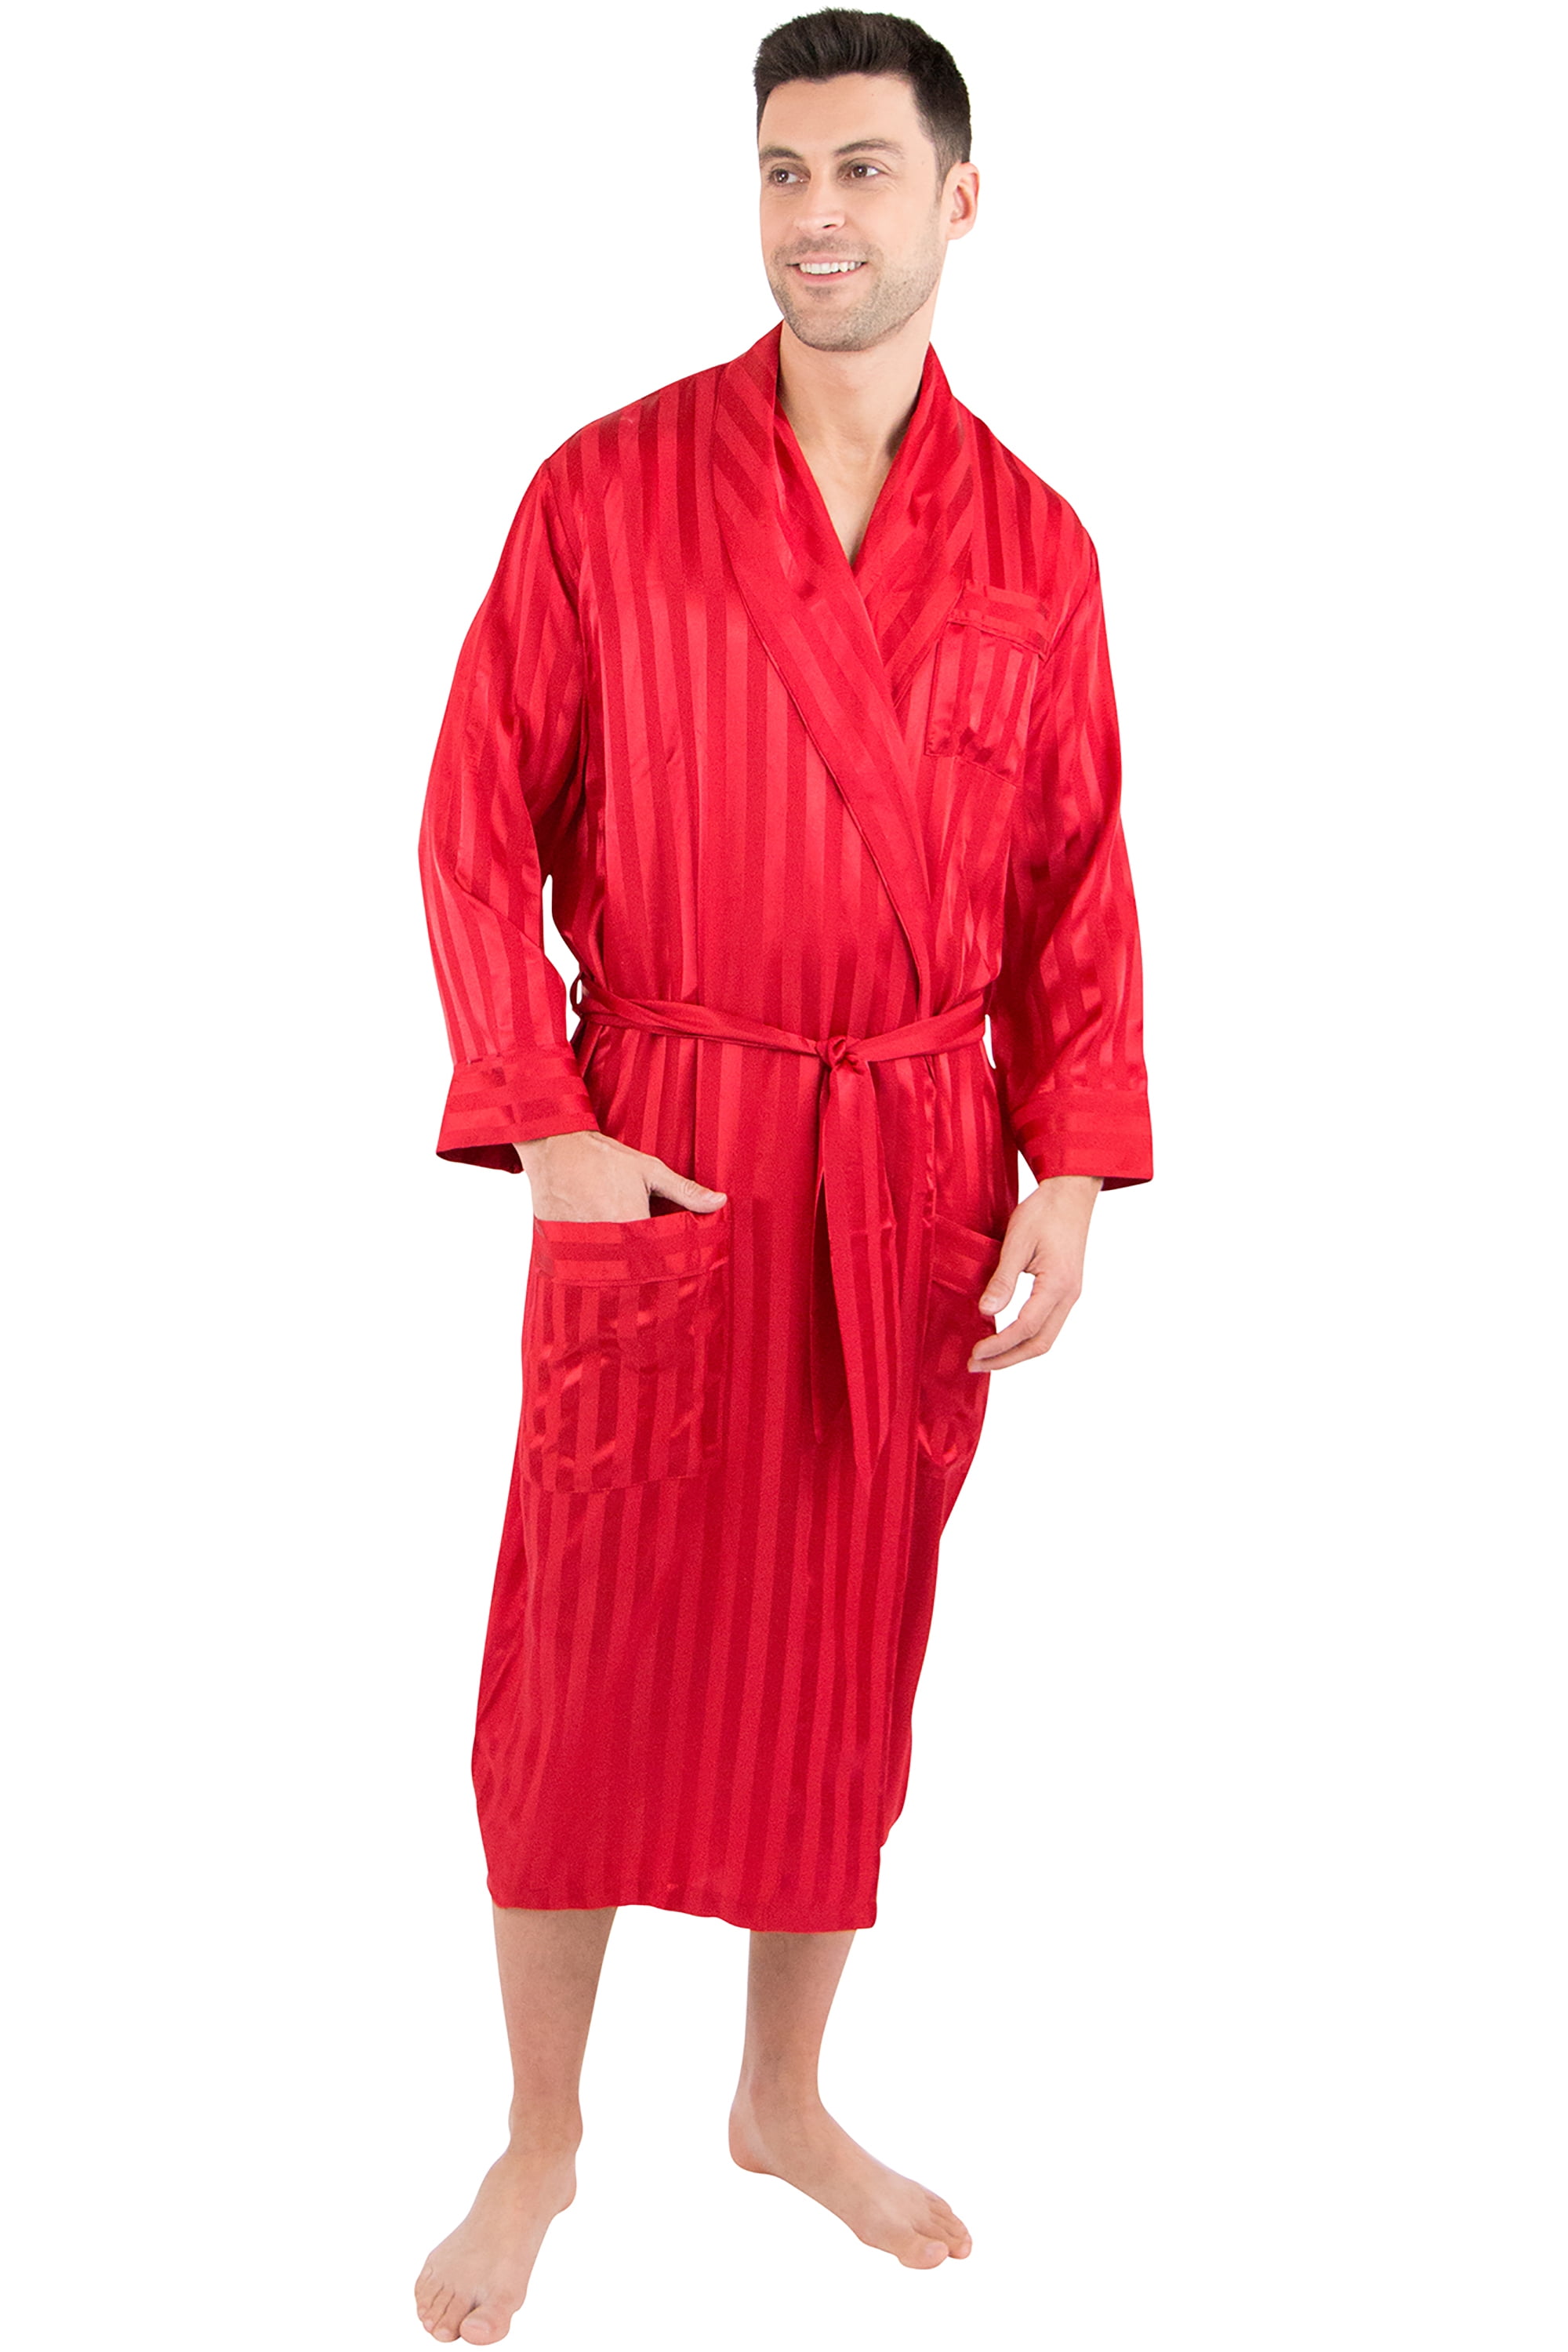 INTIMO Mens Satin Striped Silk Robe Loungewear 